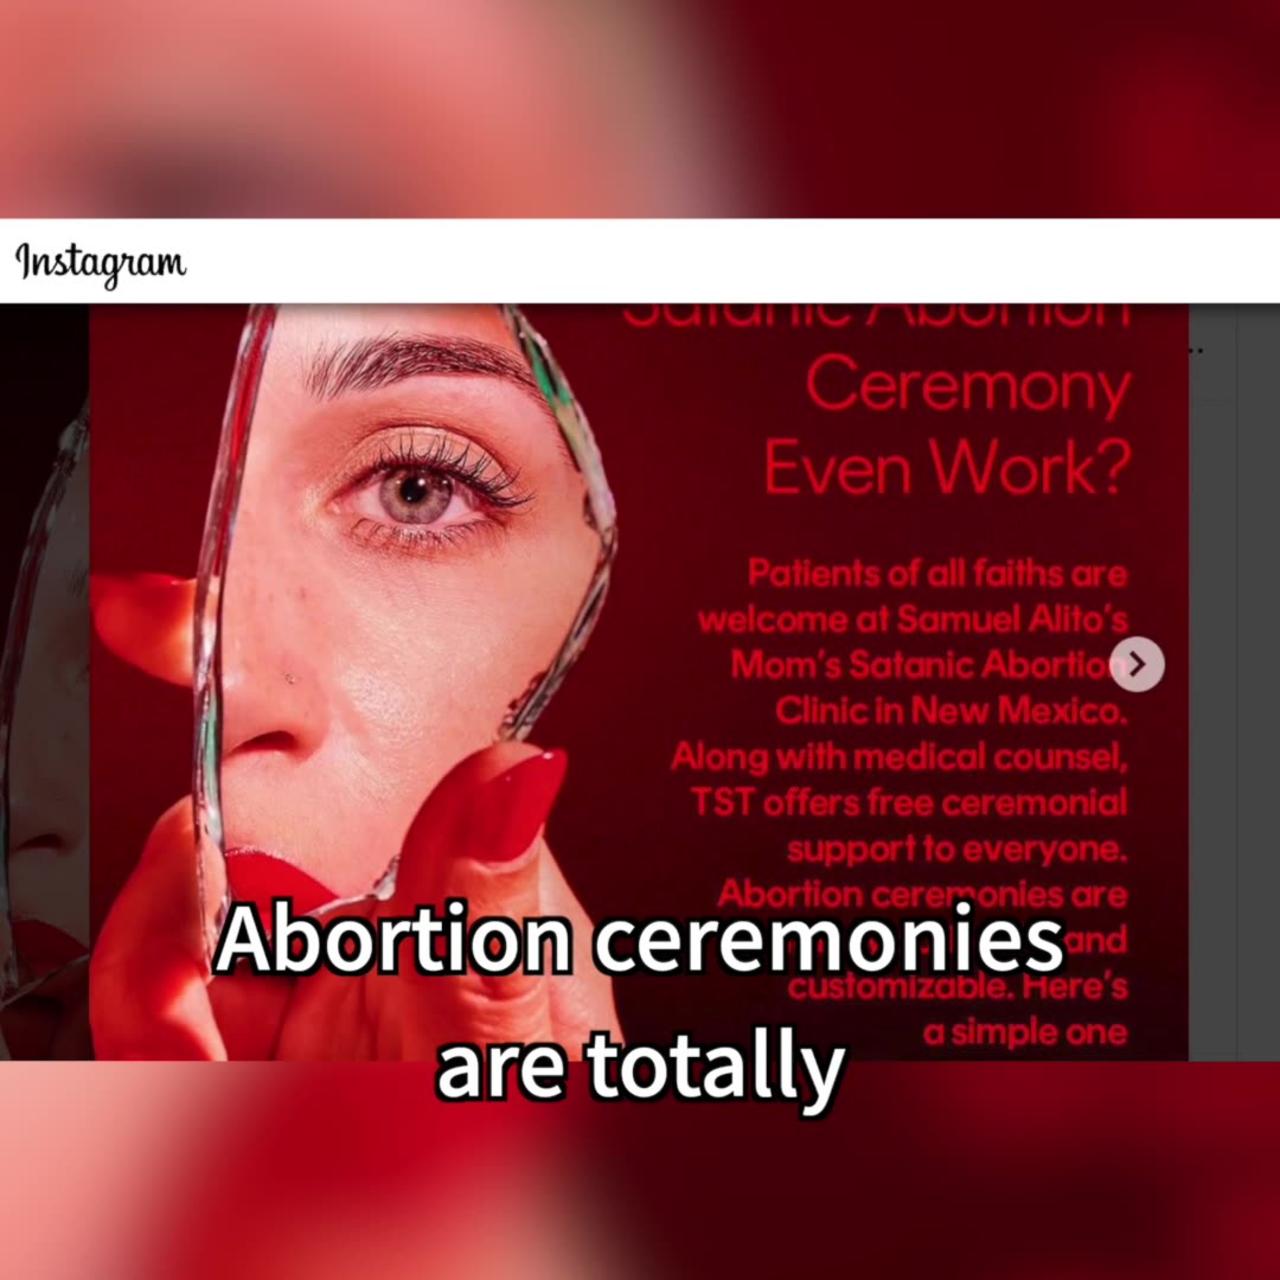 Cosmopolitan Magazine Tells how a Satanic Abortion Ceremony Works - NOT KIDDING!